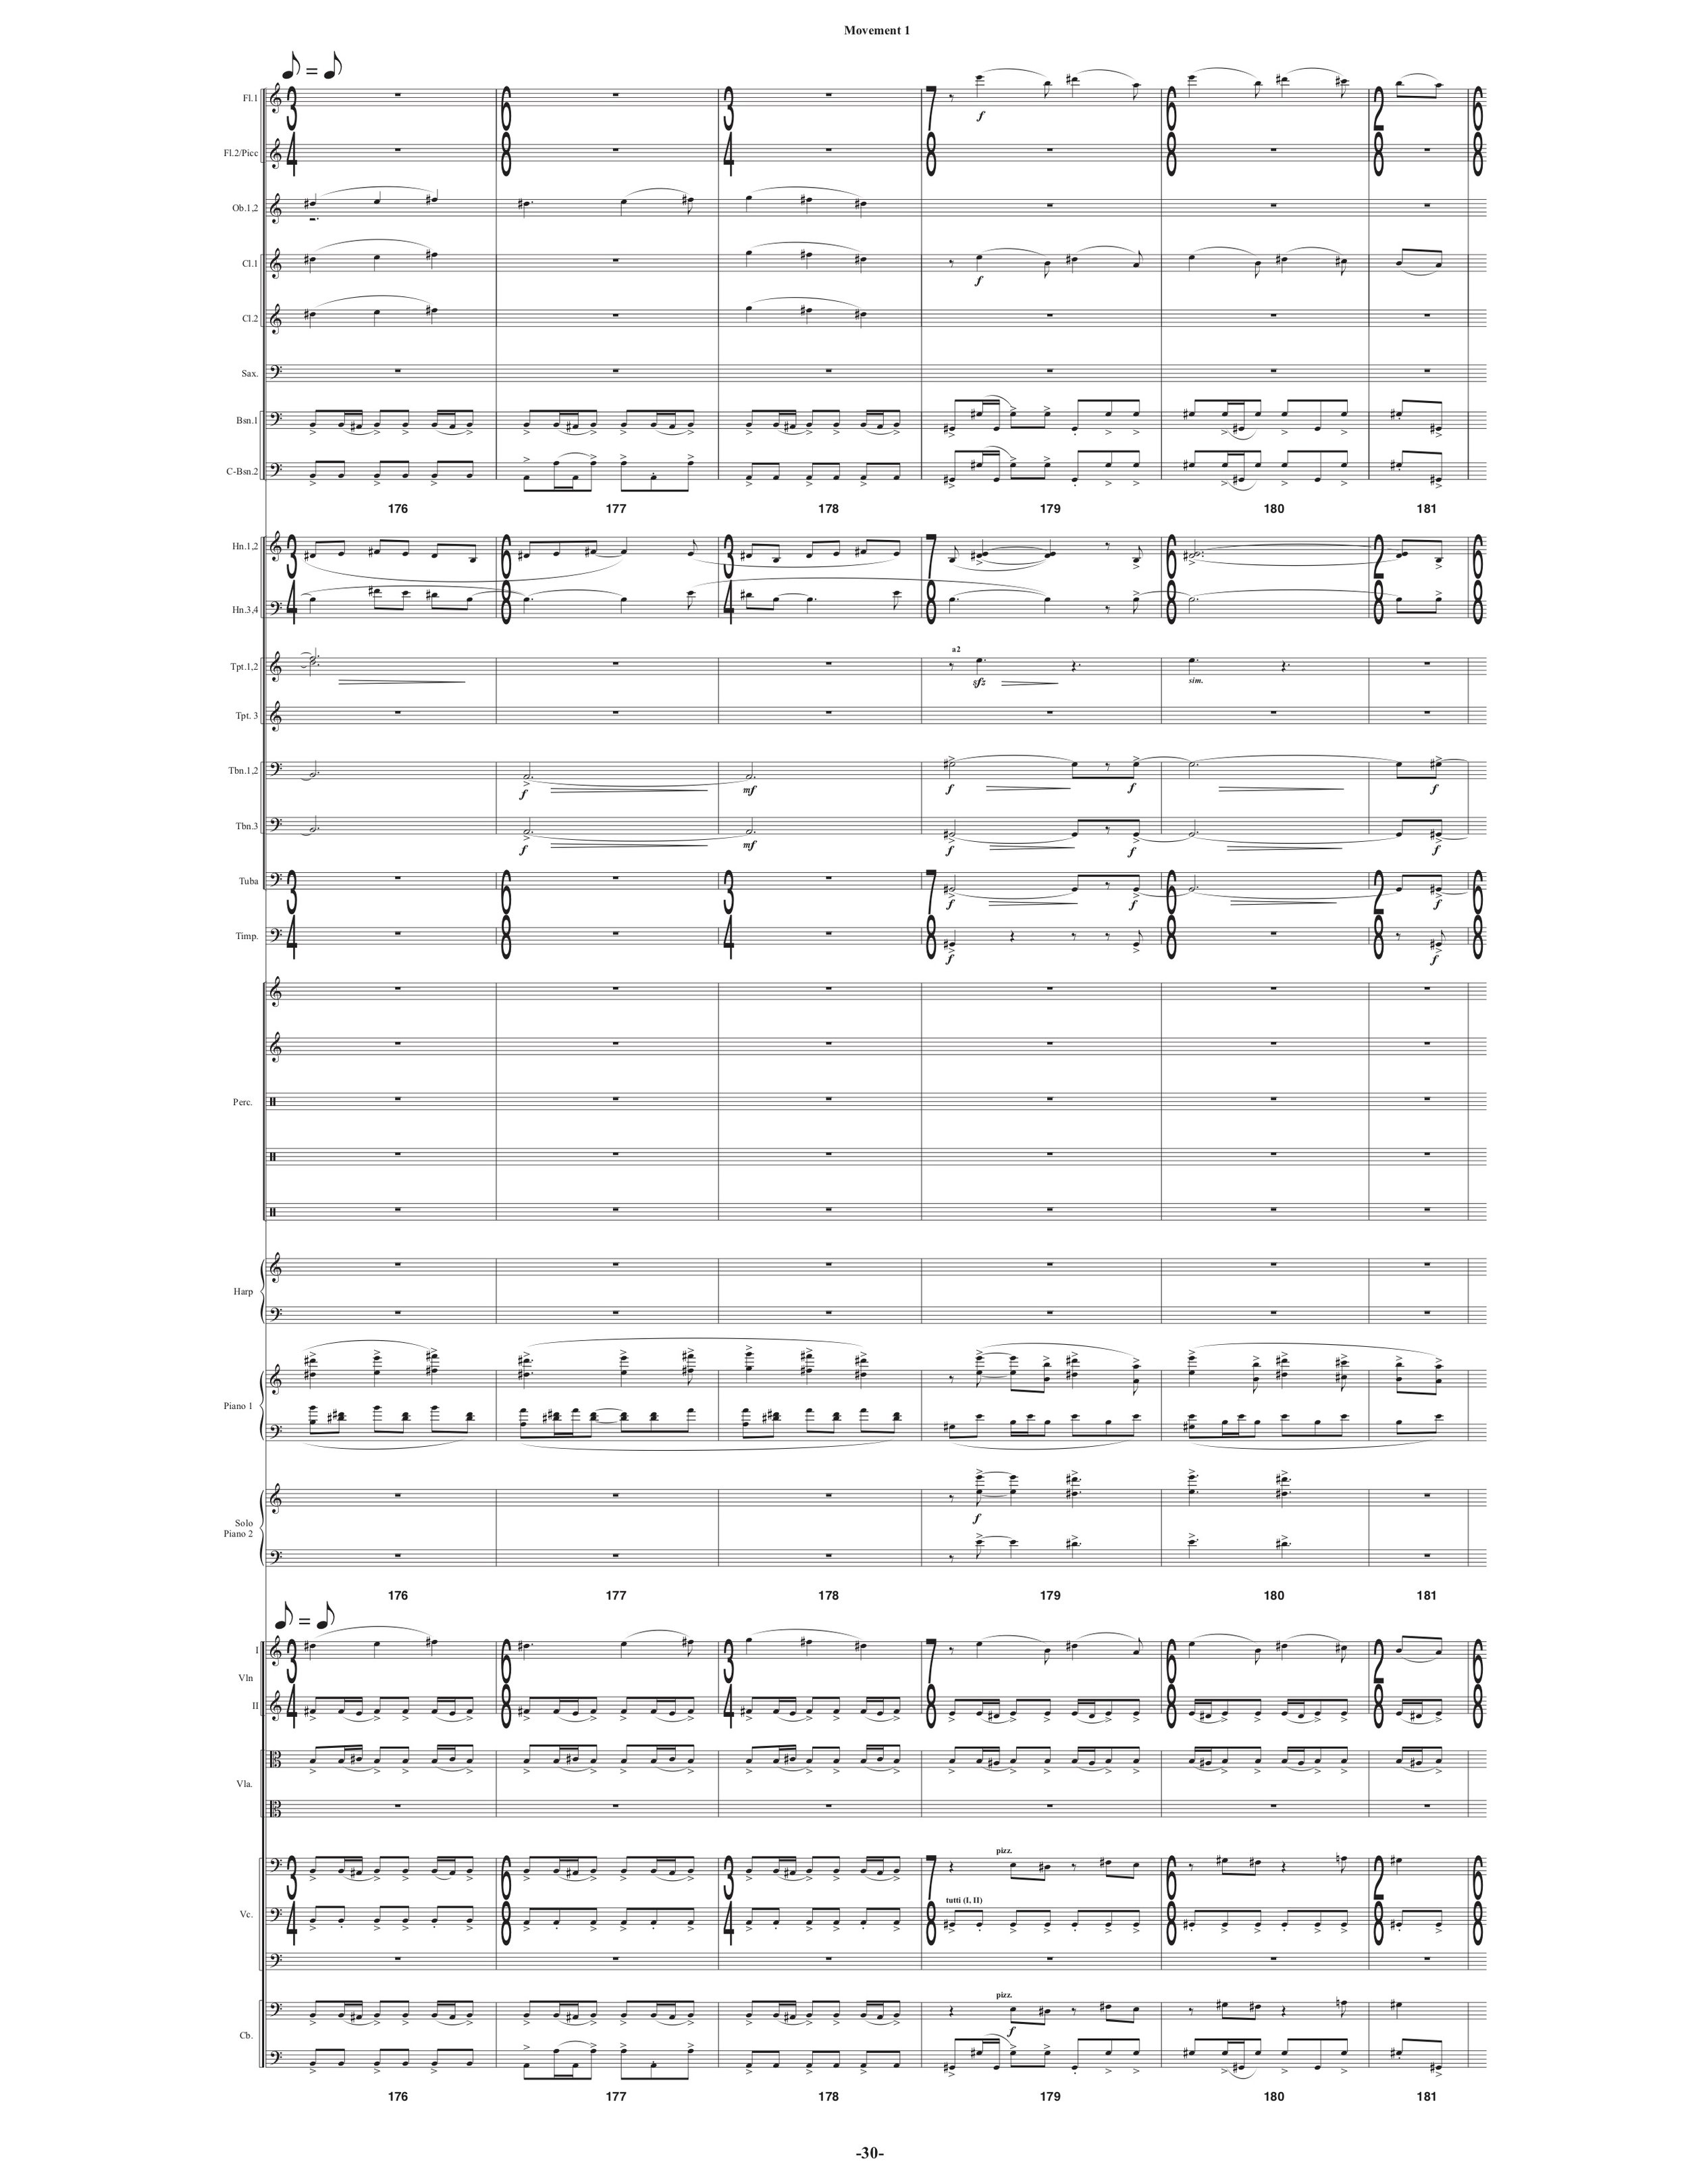 Symphony_Orch & 2 Pianos p35.jpg